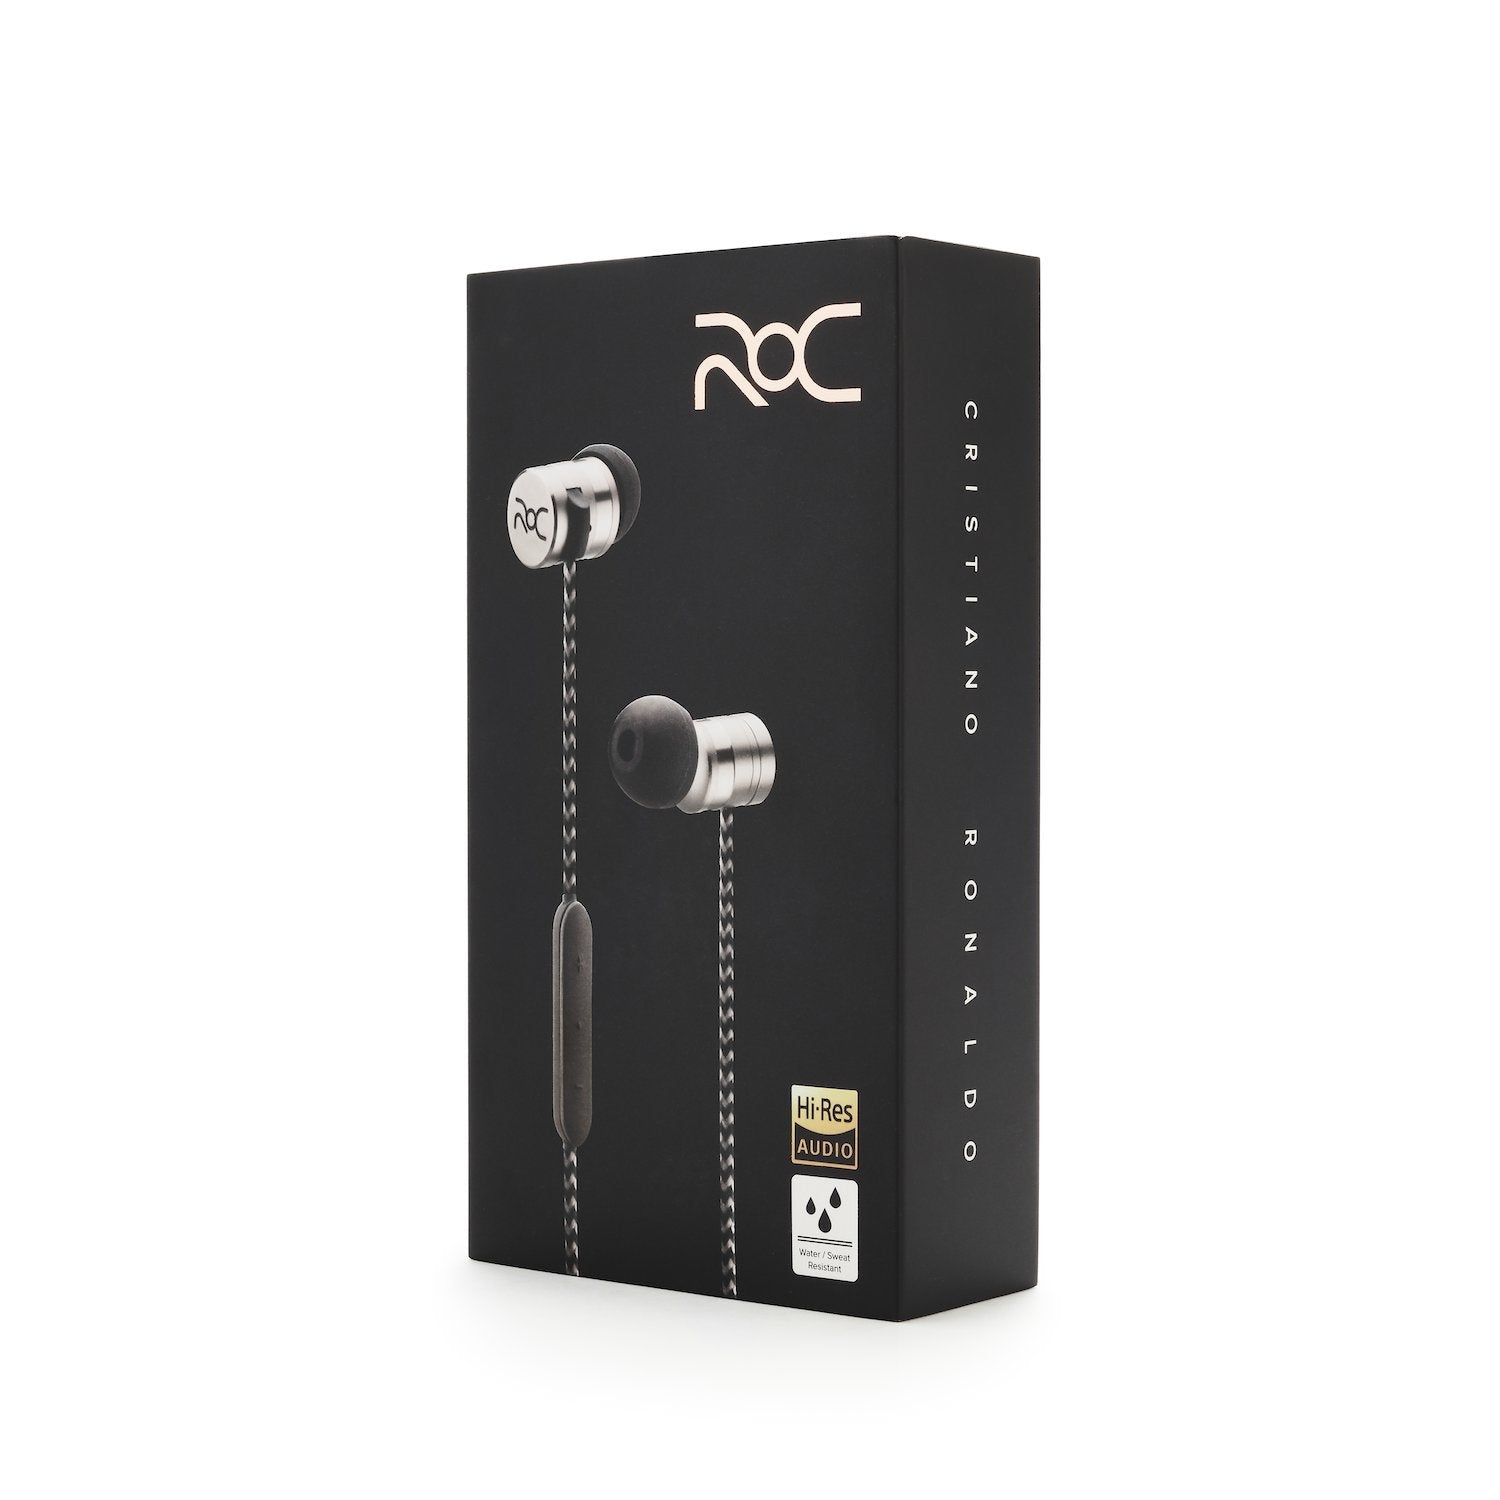 ROC Model III - Silver by Cristiano Ronaldo Wired Sport Earbuds in-Ear Headphones Silver